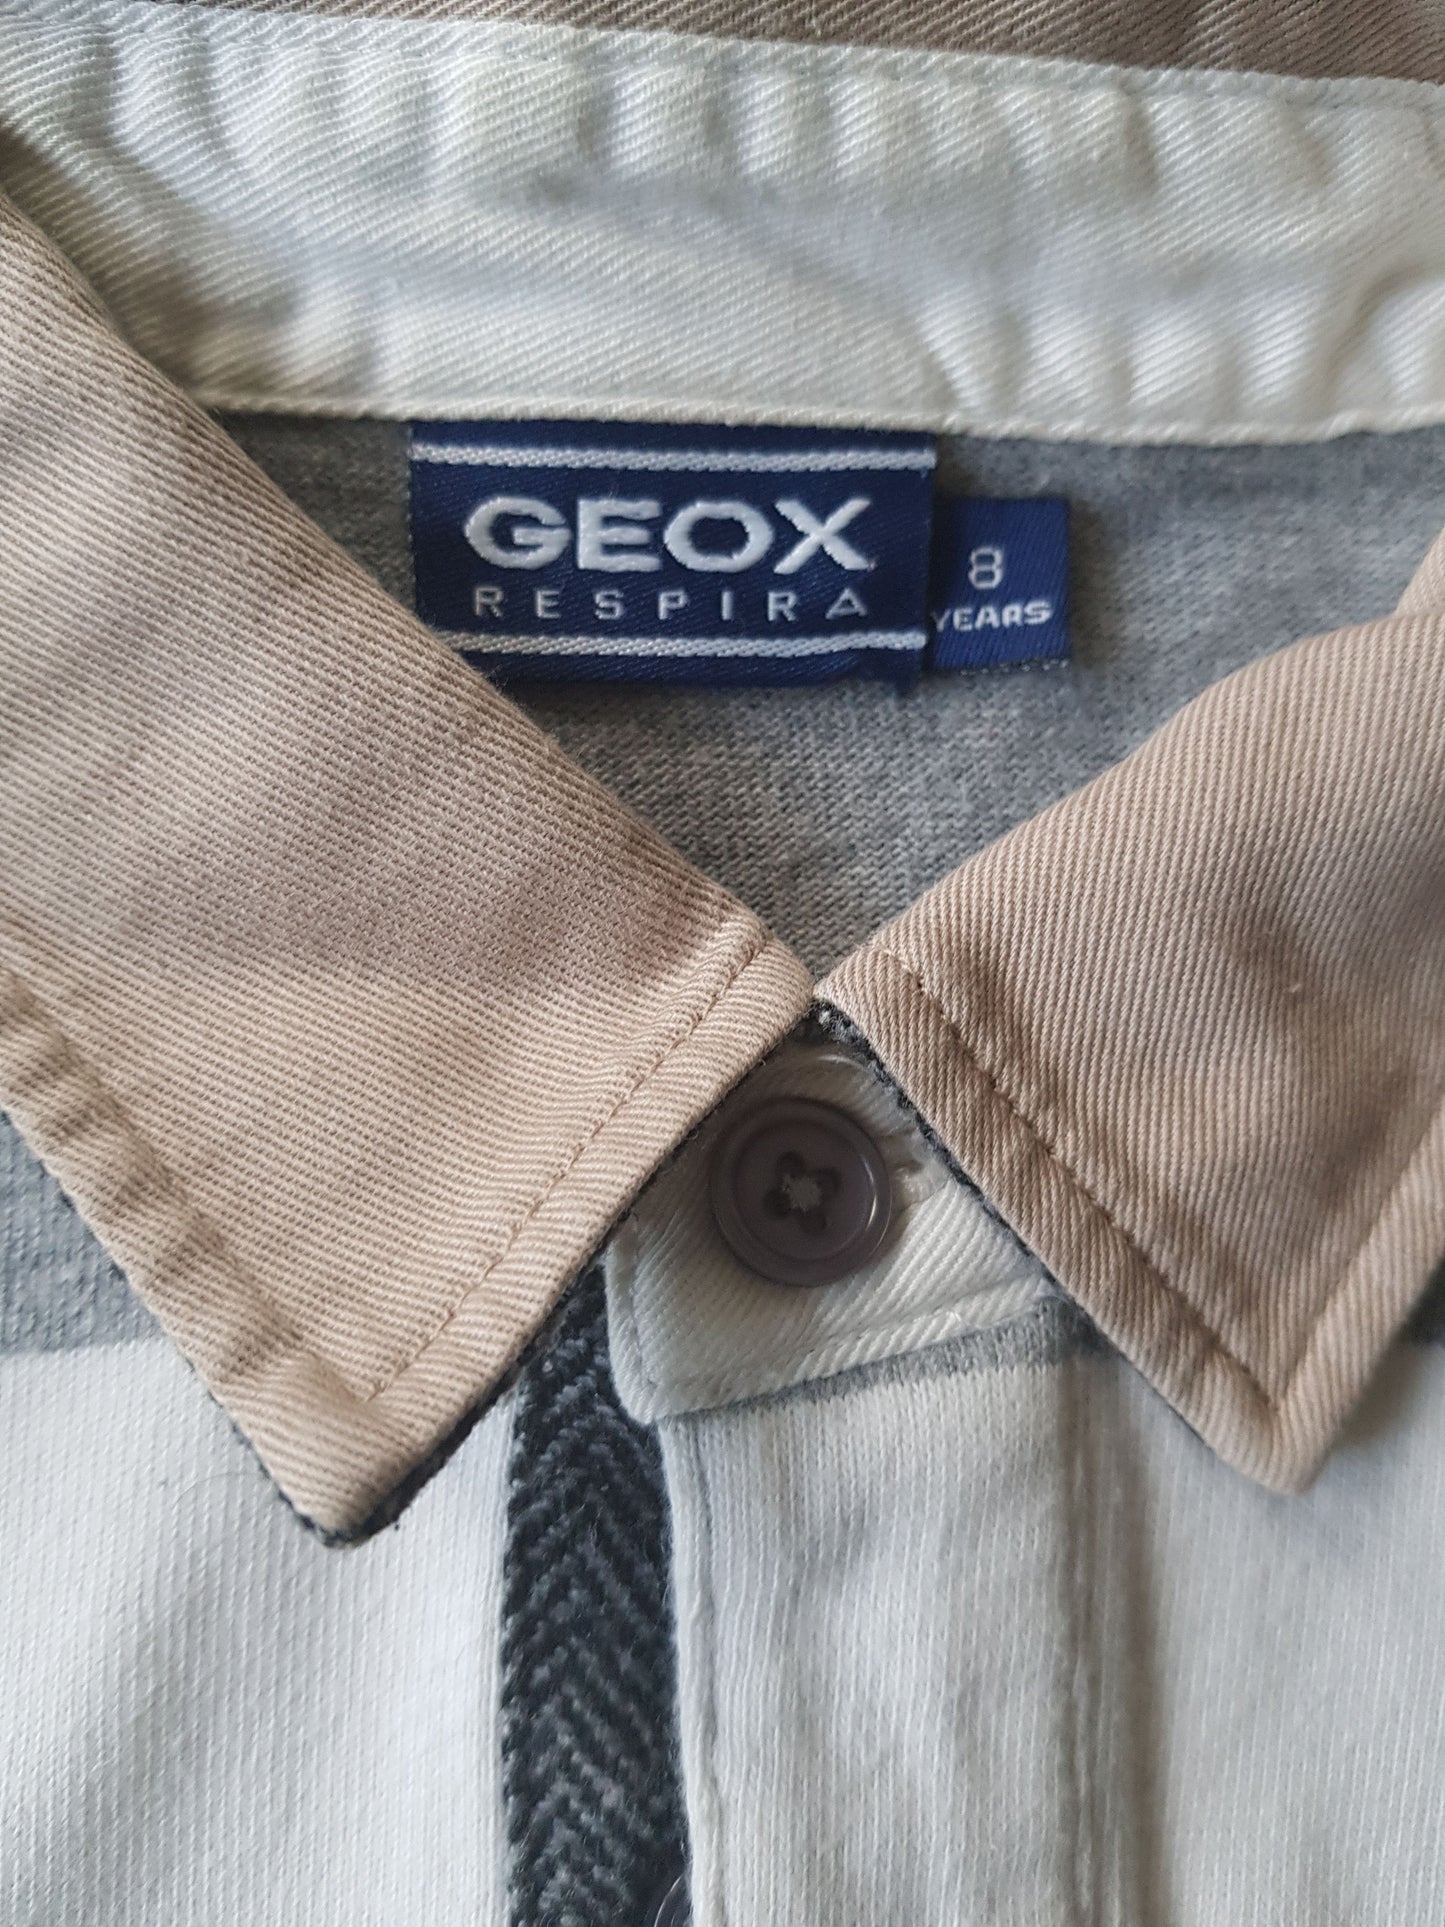 Geox Very Good,8 yr Geox Respira  (6615490953401)